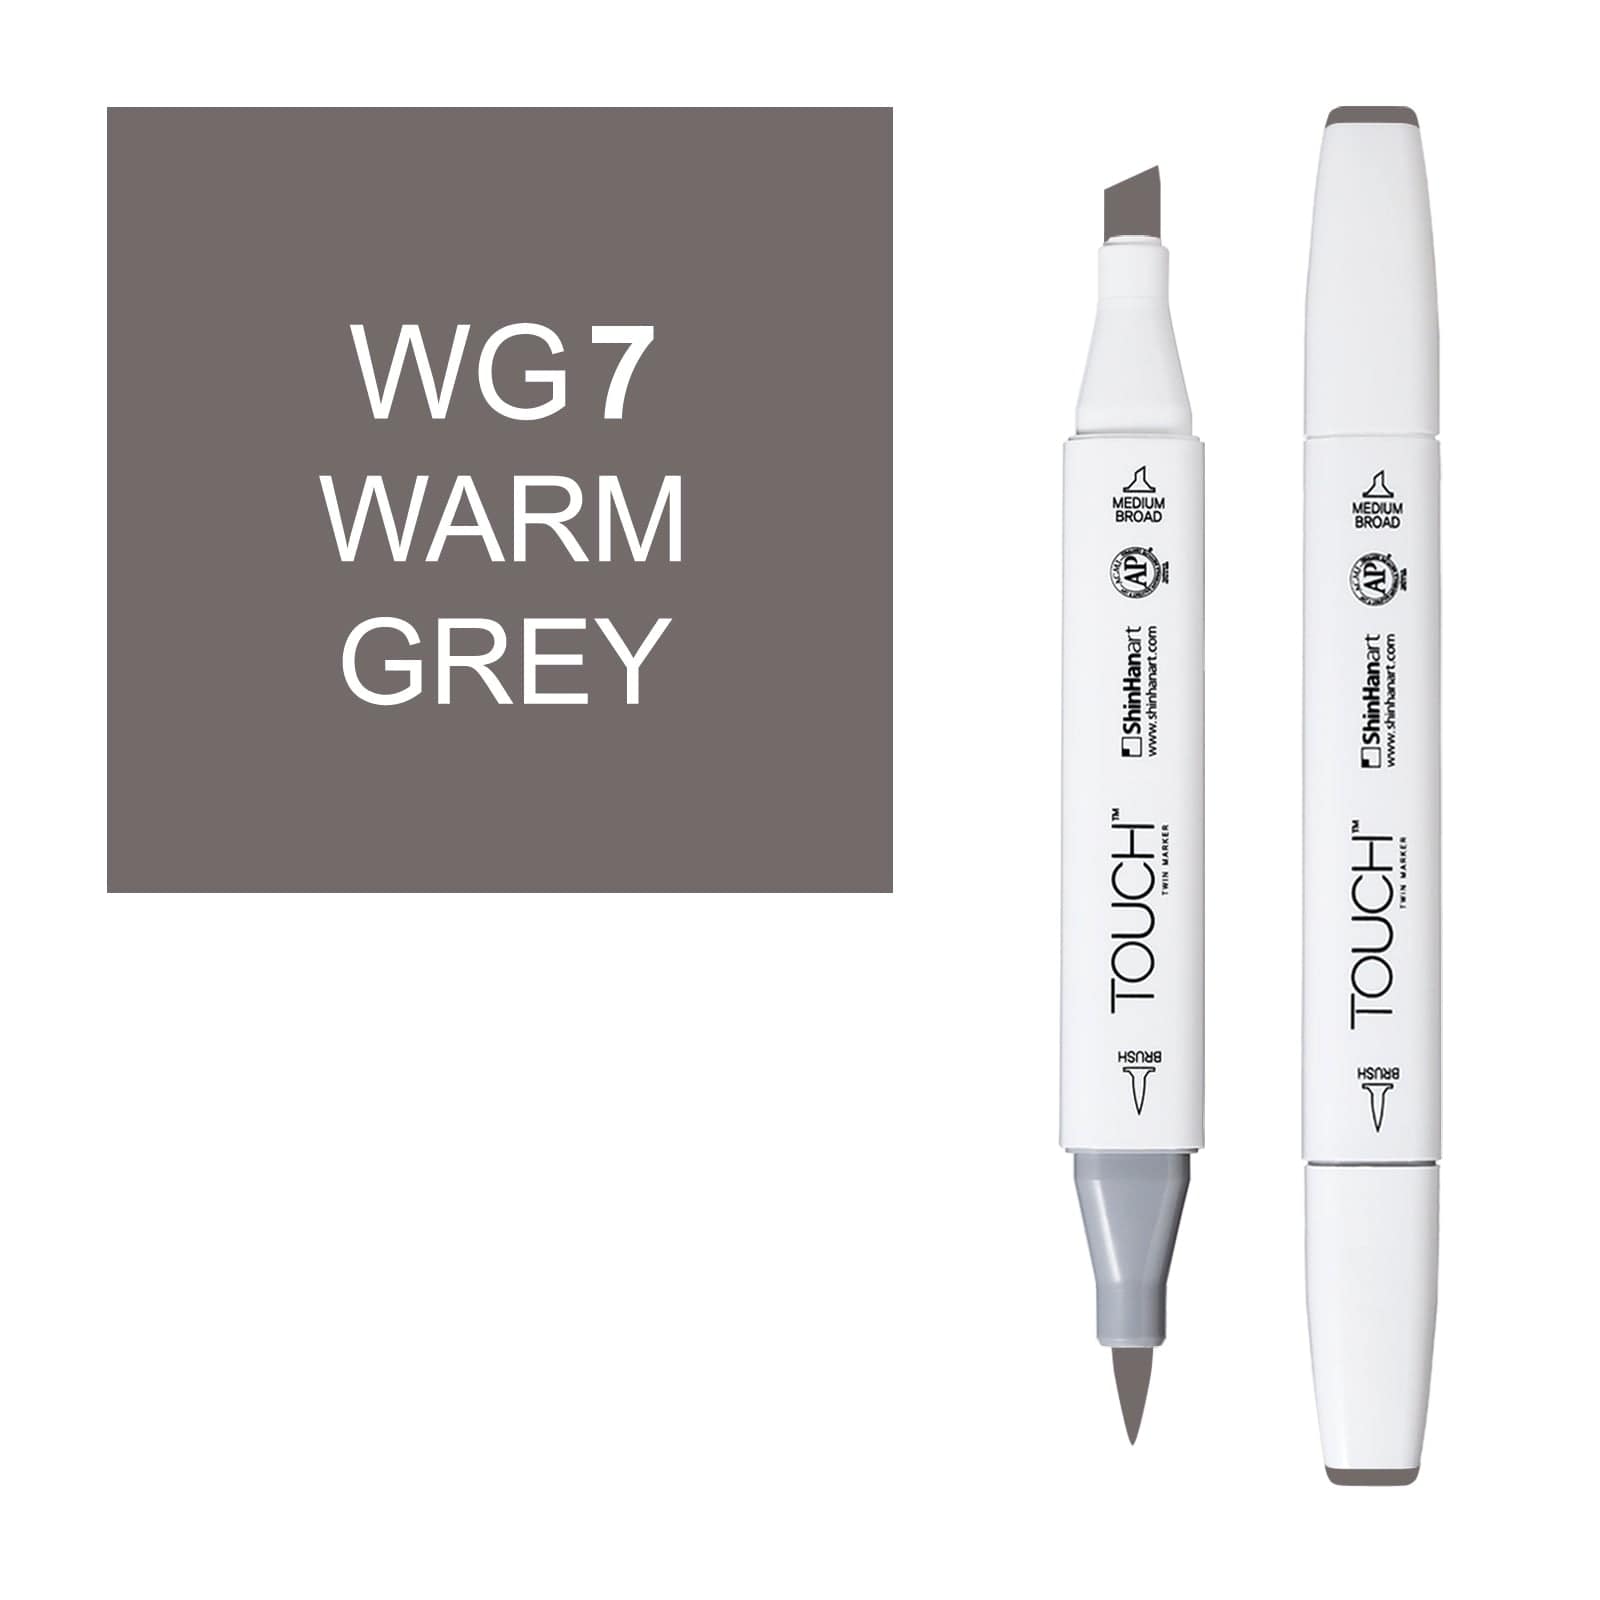 ShinHanart Touch Twin Brush Markers 7 warm grey